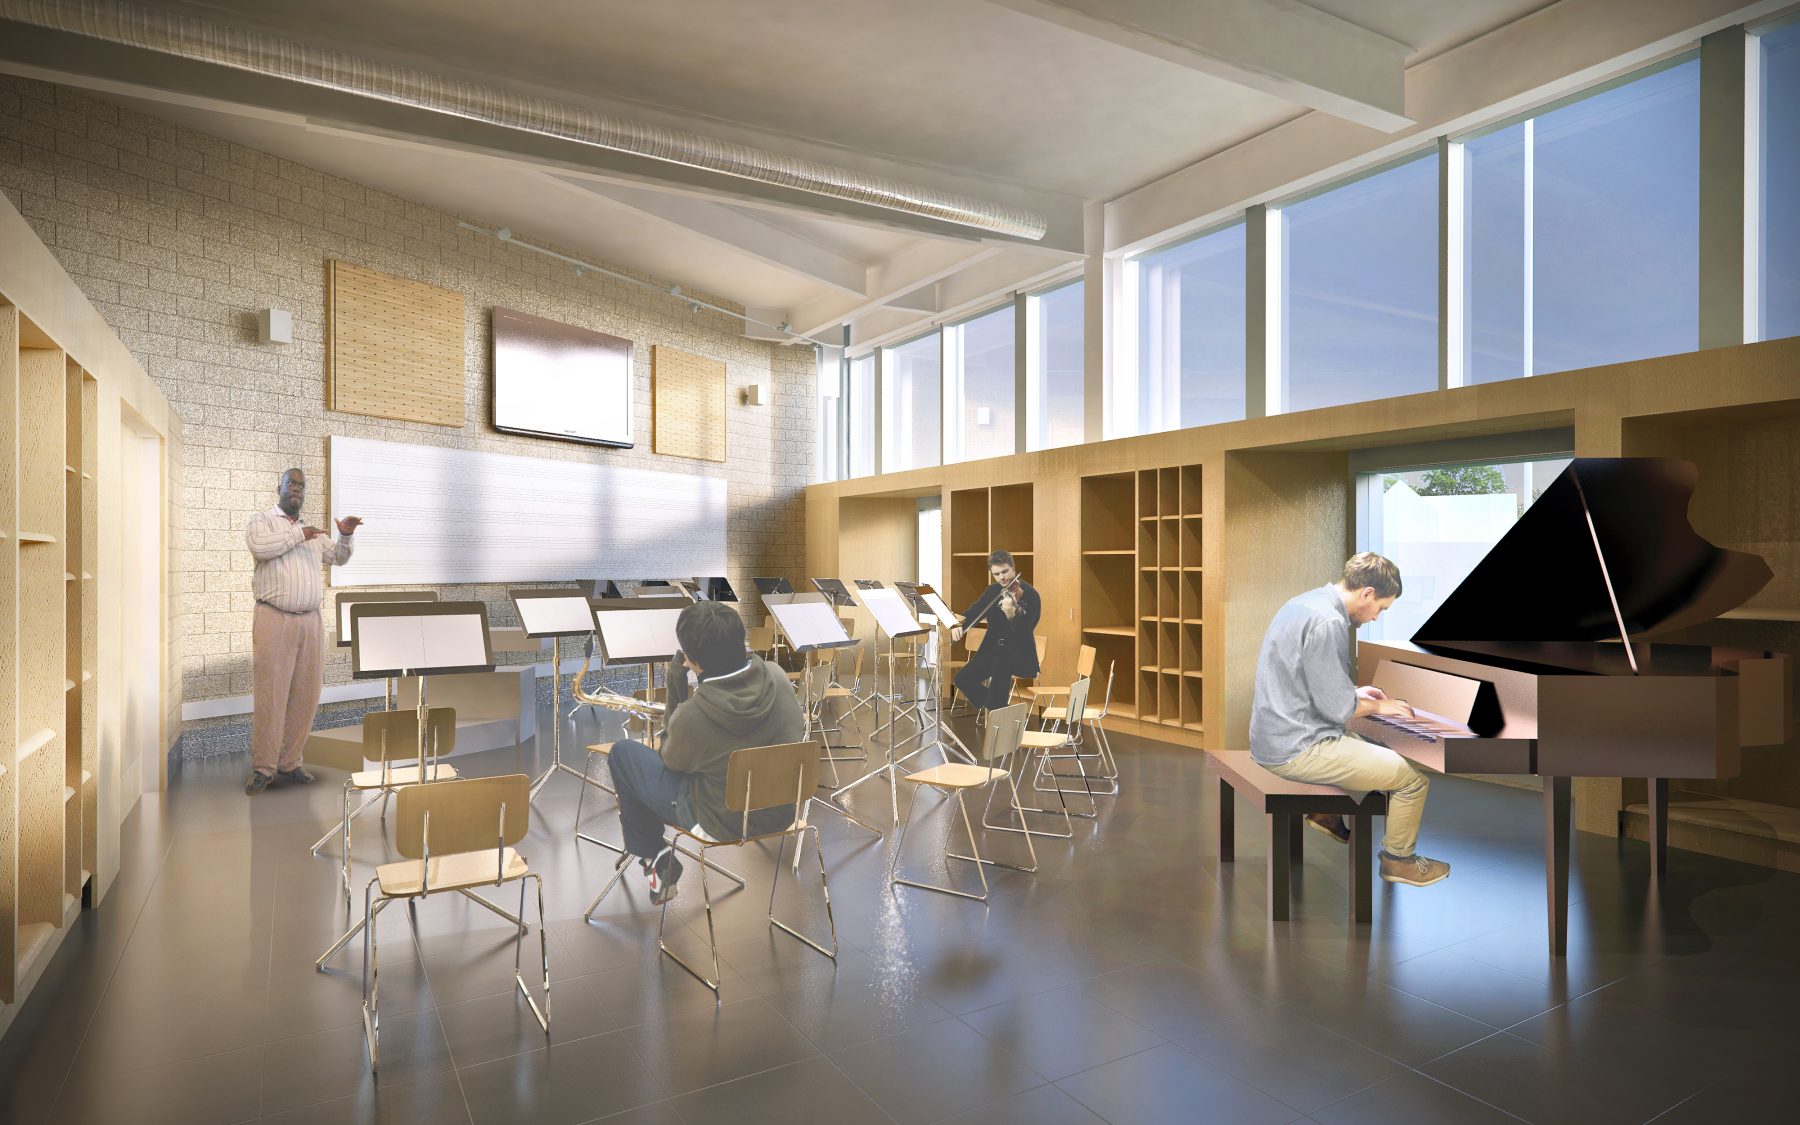 shipley-school-commons-interior band room rendering